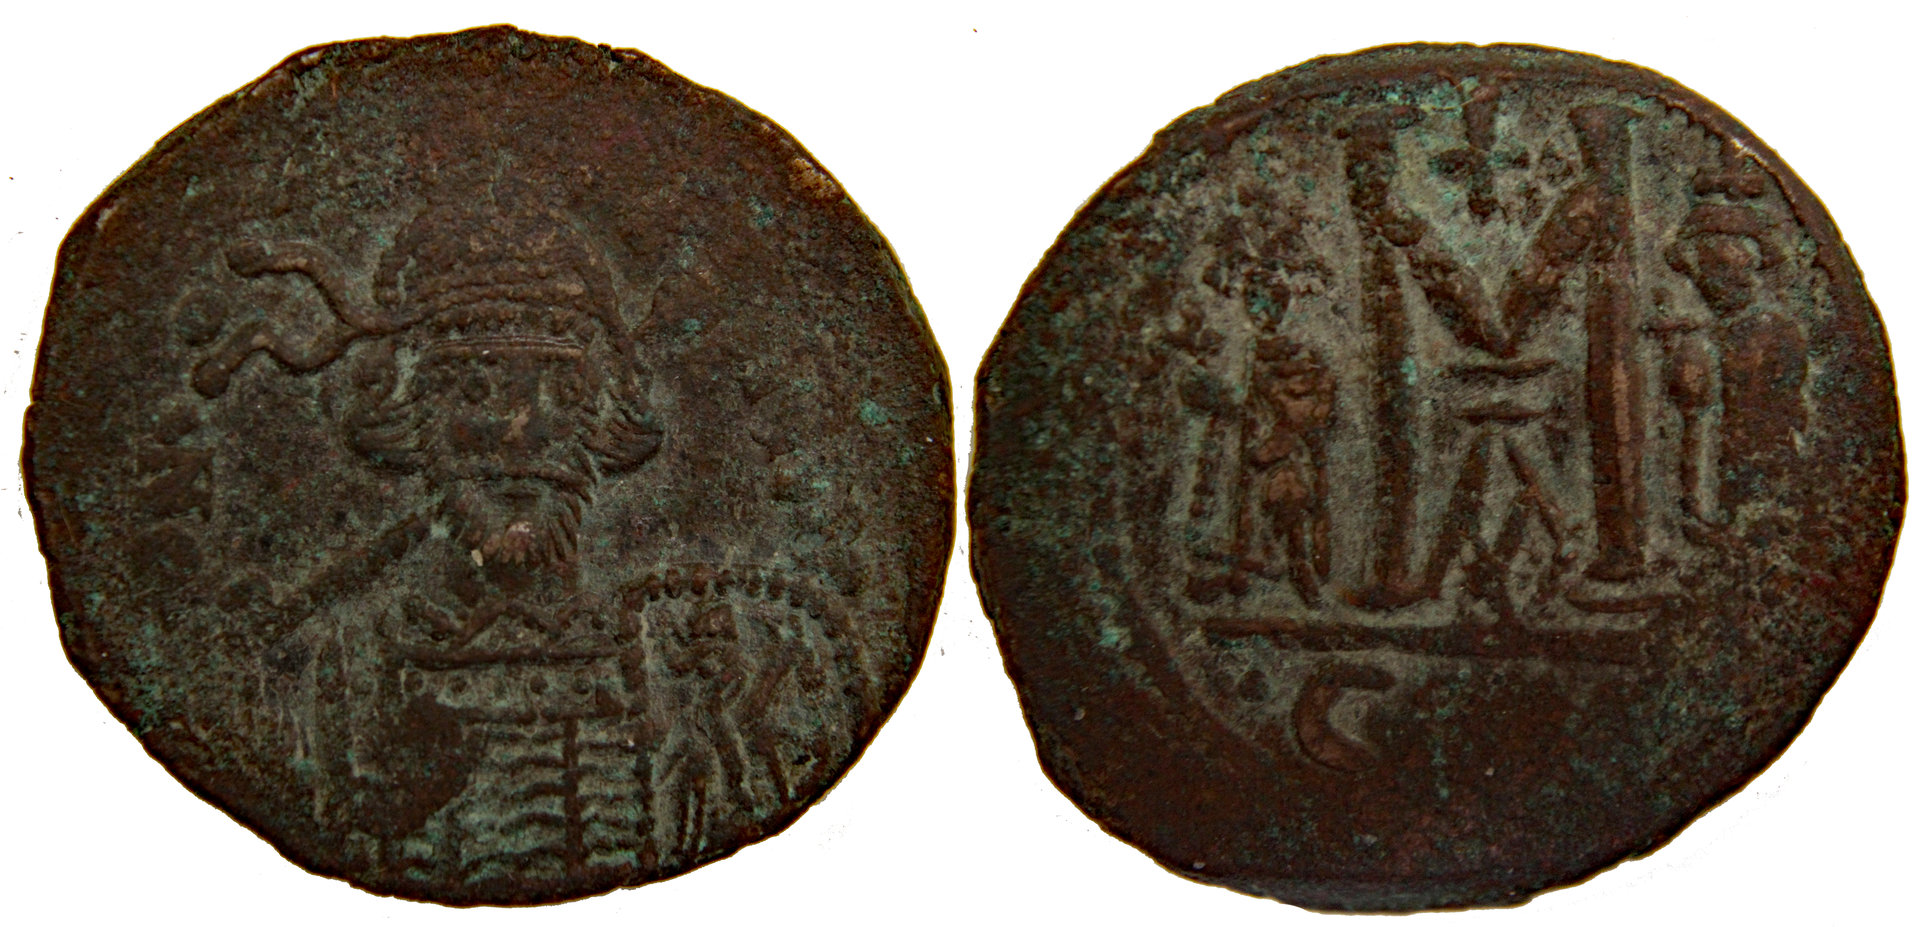 D-Camera Constantine IV Follis, 668-685 AD, 17.3 grams, Berk purchase  6-6-20.jpg